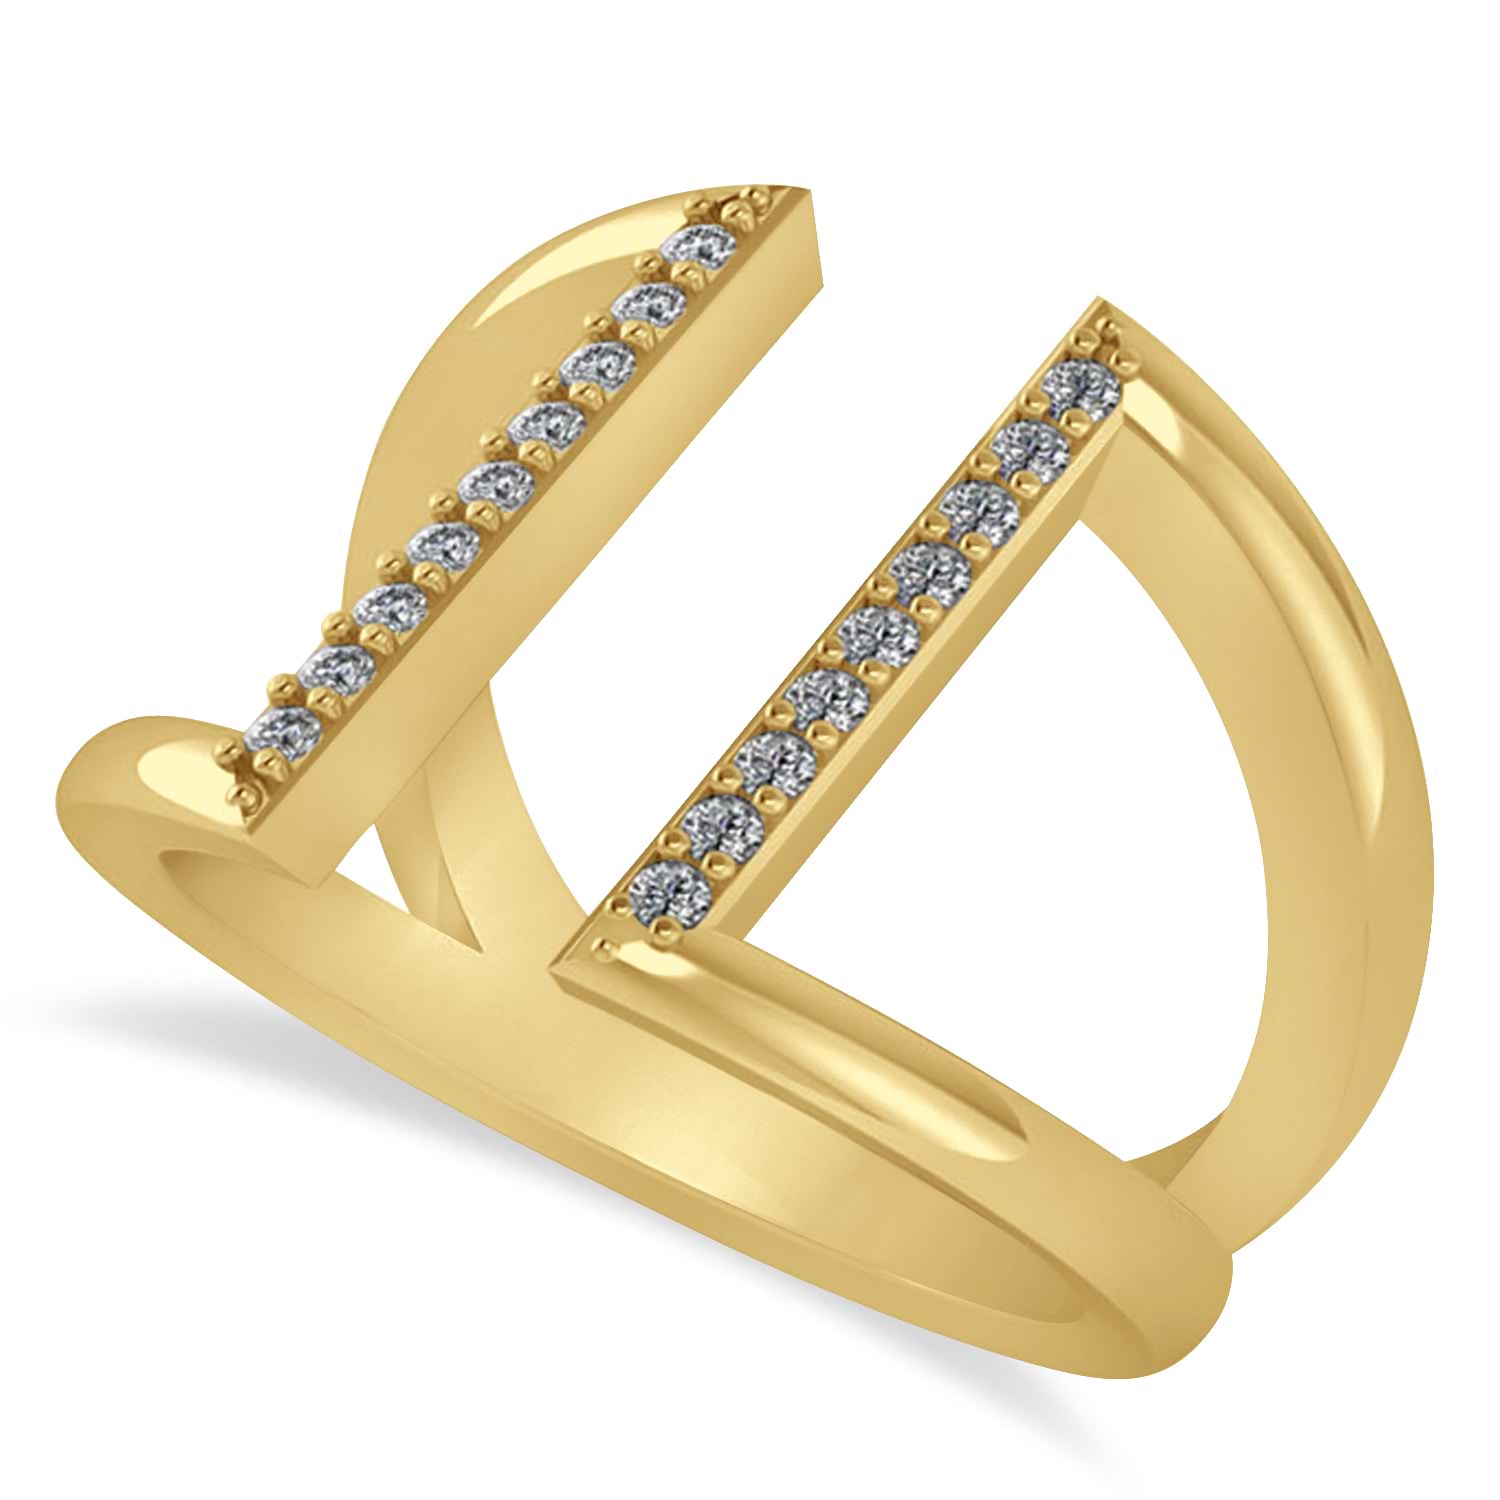 Diamond Double Bar Fashion Ring 14K Yellow Gold (0.18ct)